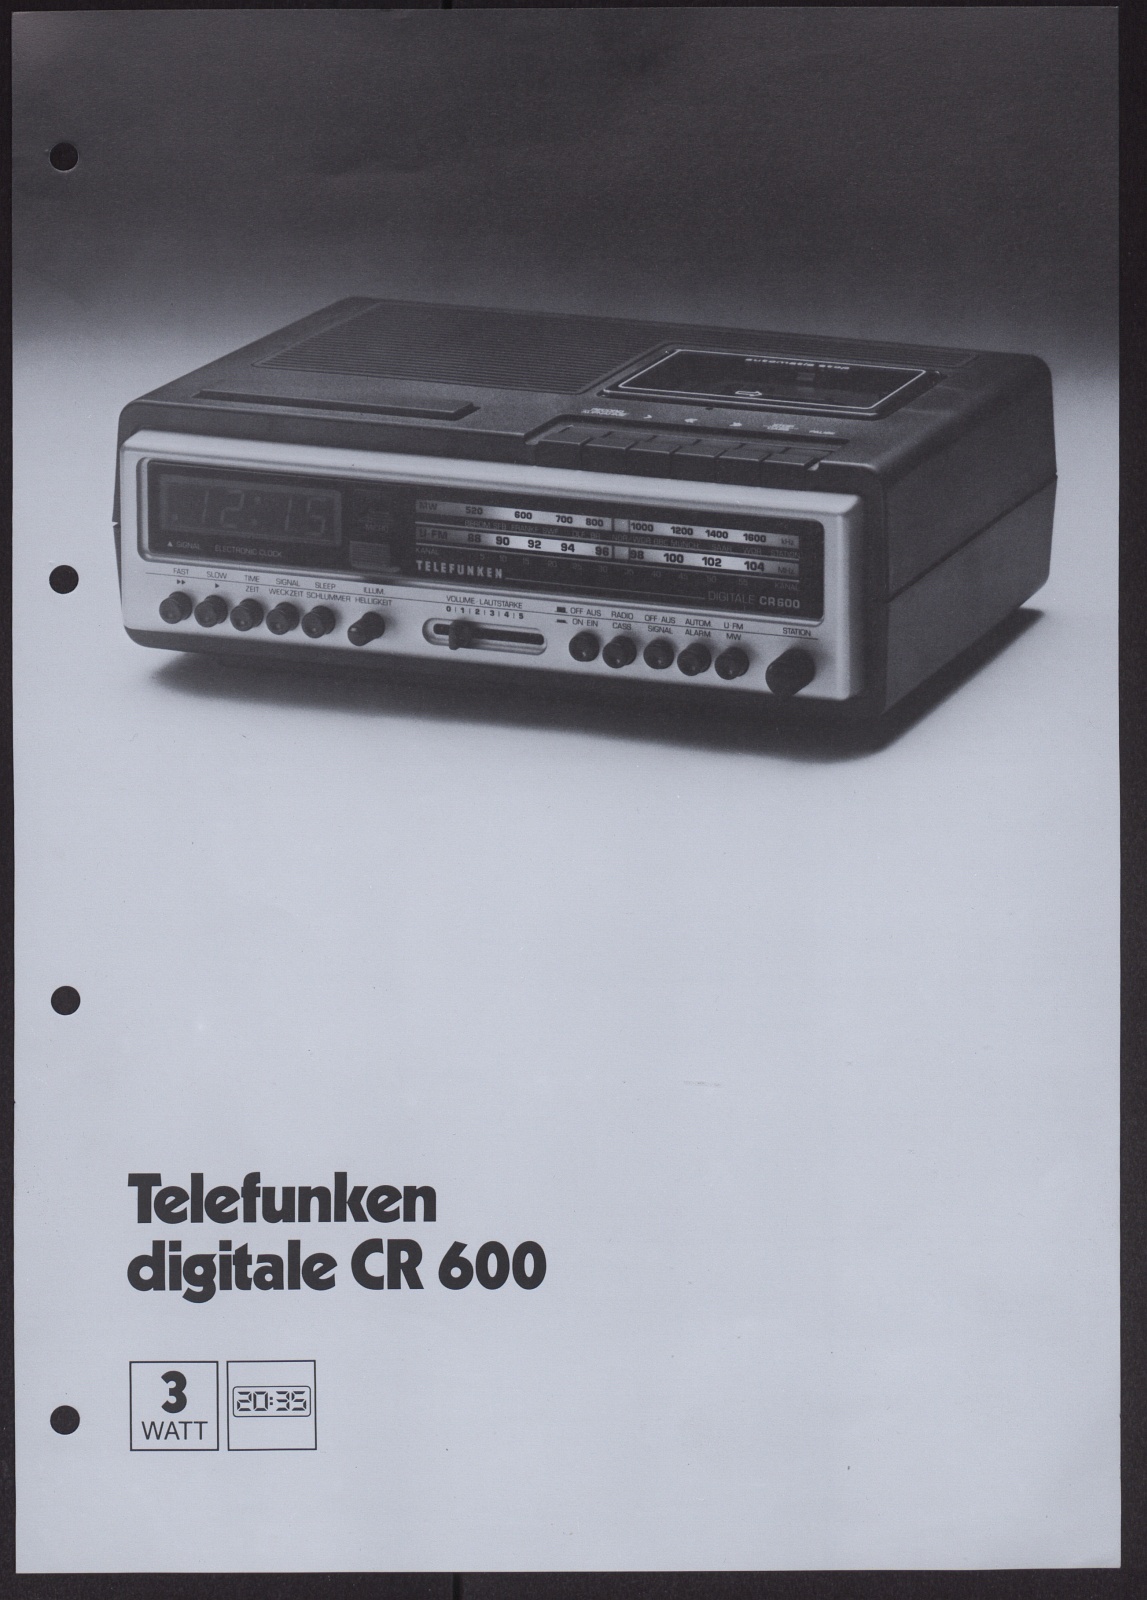 Werbeprospekt: Telefunken digitale CR 600 (Stiftung Deutsches Technikmuseum Berlin CC0)